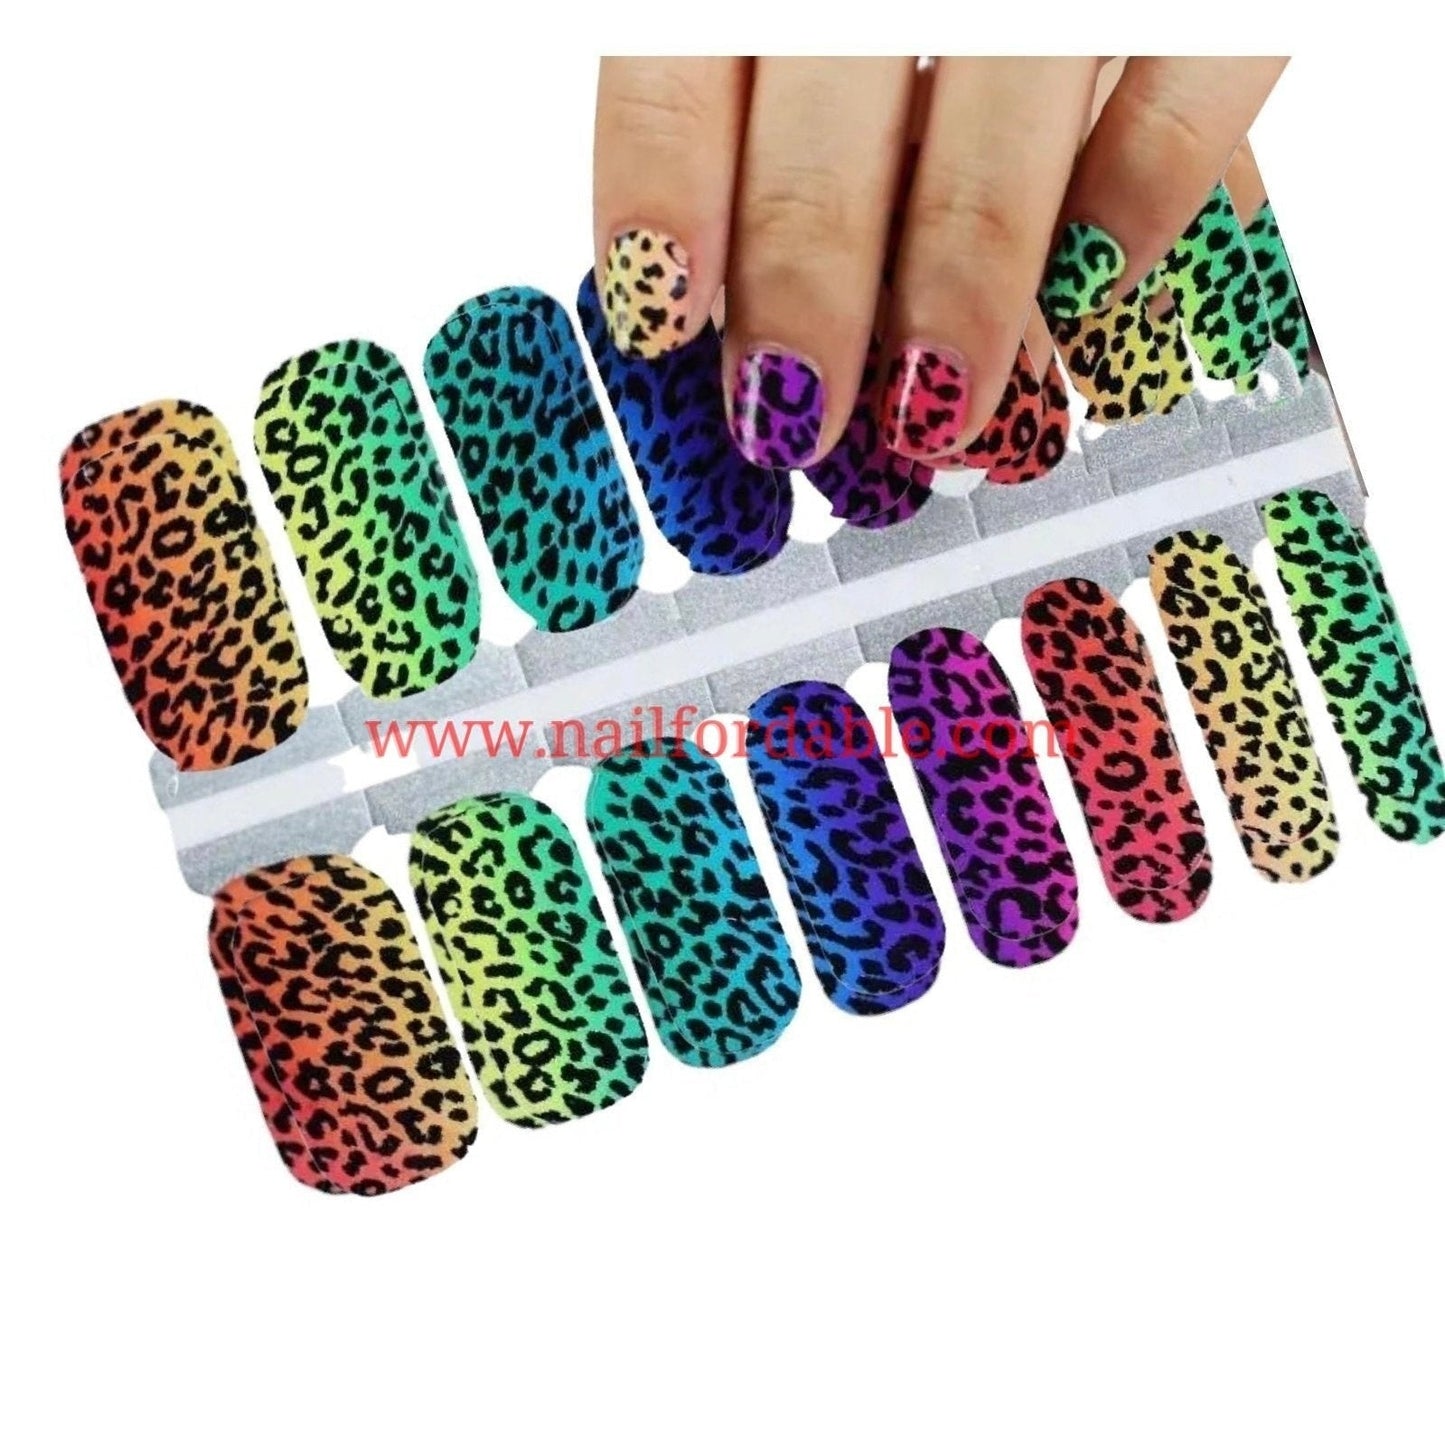 Leopard neon Nail Wraps | Semi Cured Gel Wraps | Gel Nail Wraps |Nail Polish | Nail Stickers